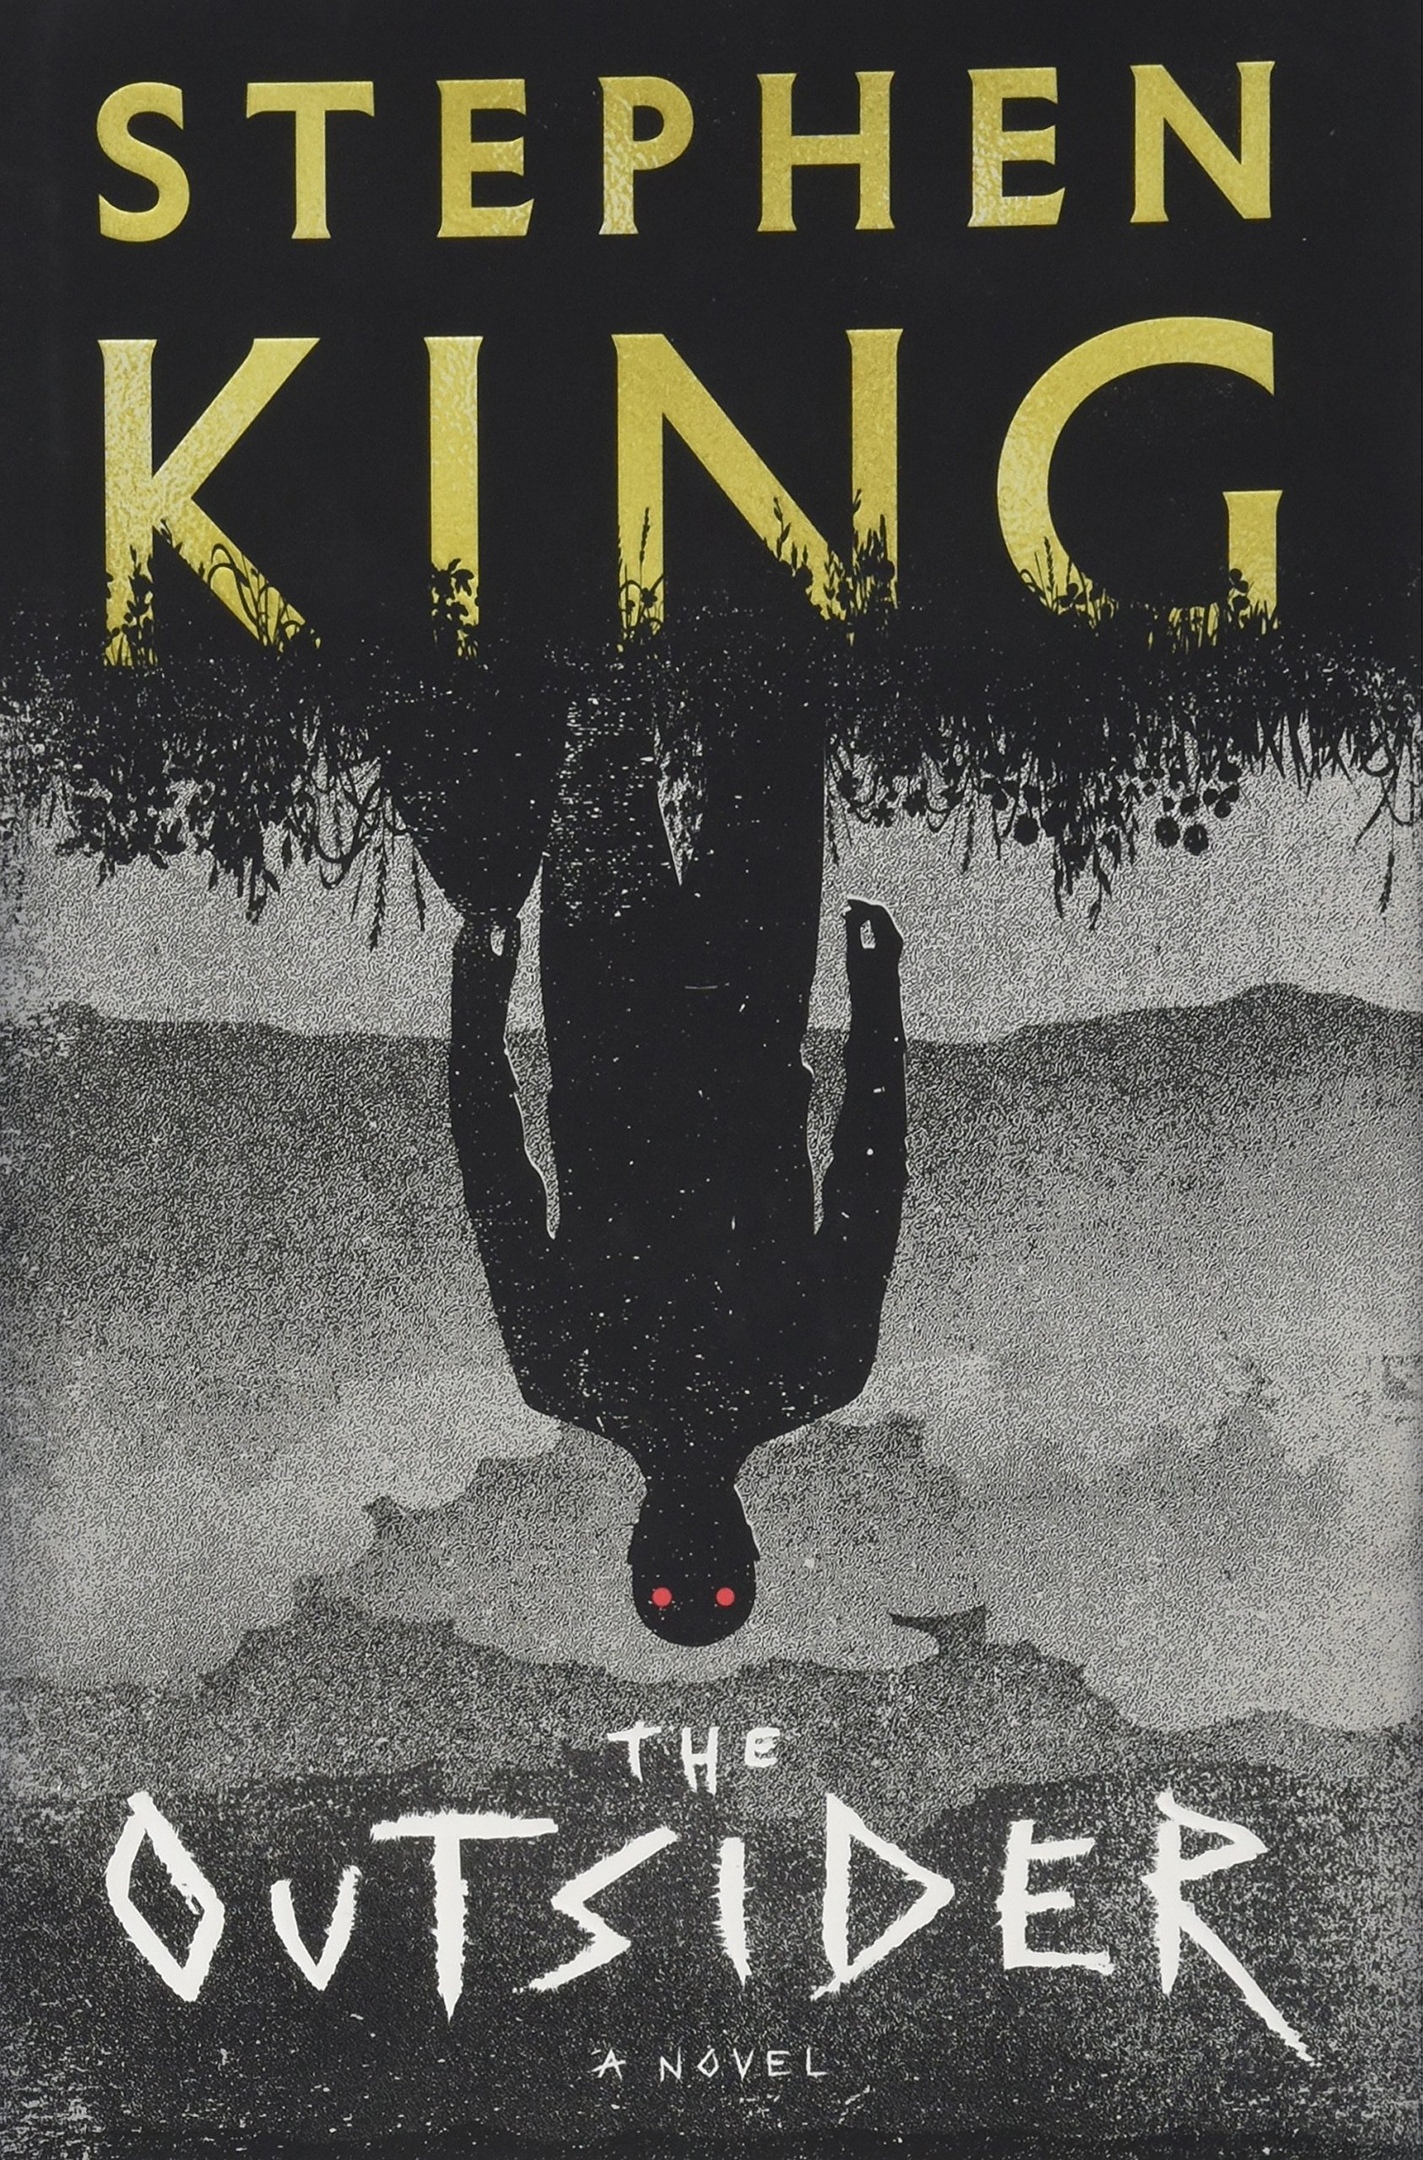 Stephen King – The Outsider